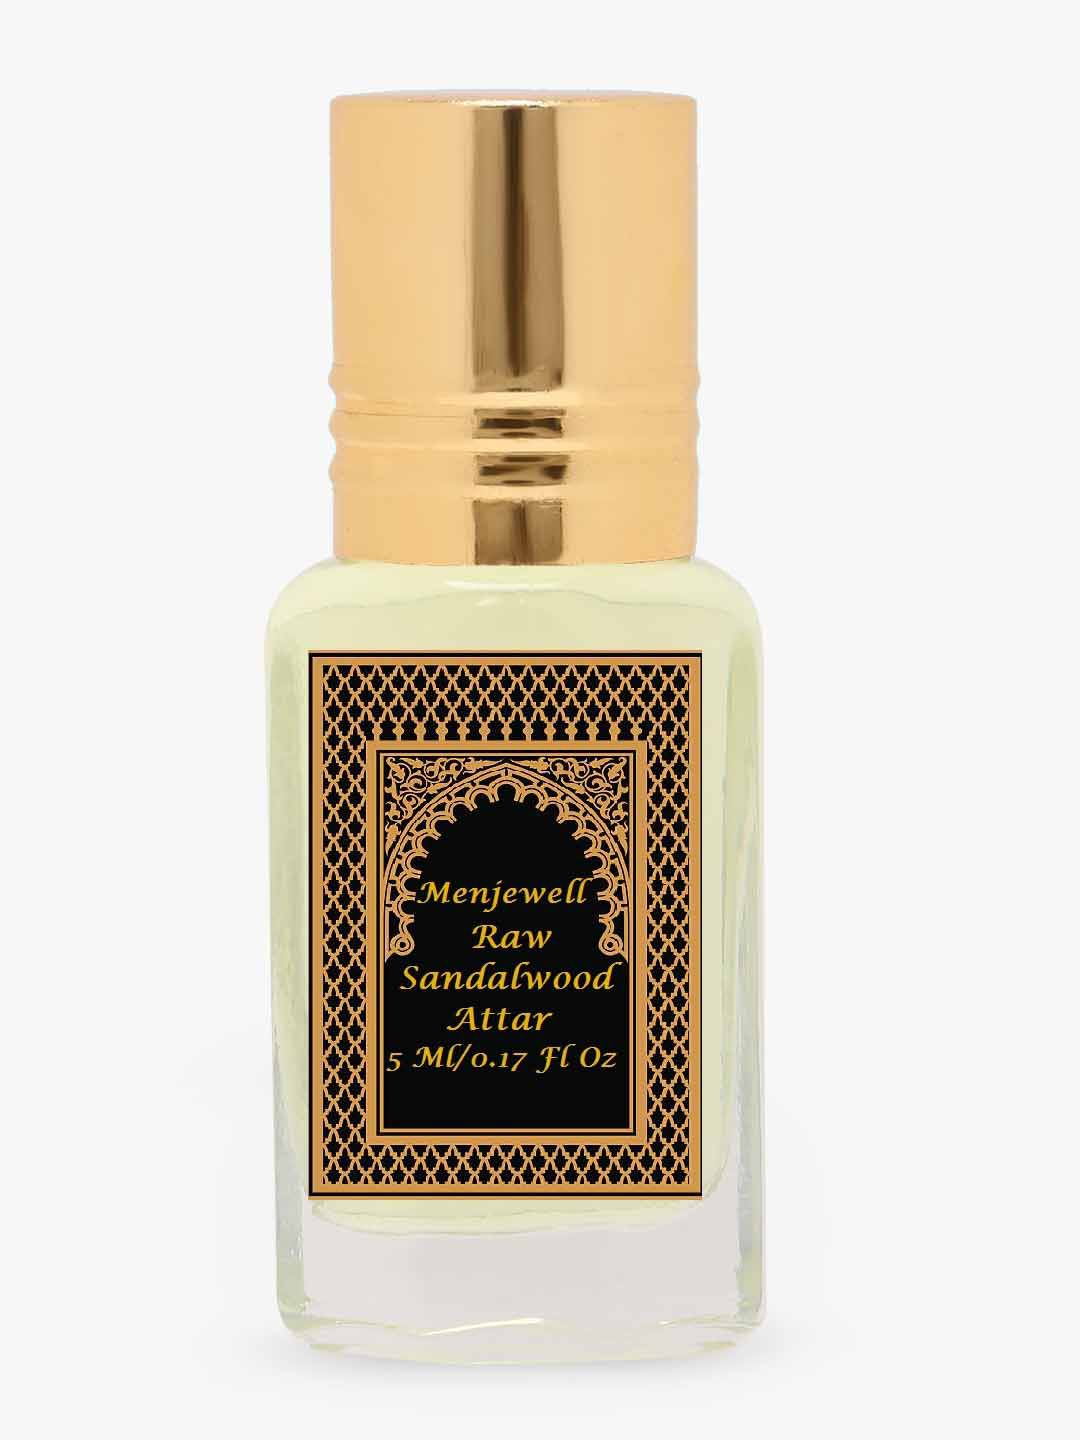 Menjewell Fragrances Raw Sandalwood Attar Perfume 5 ml Price in India